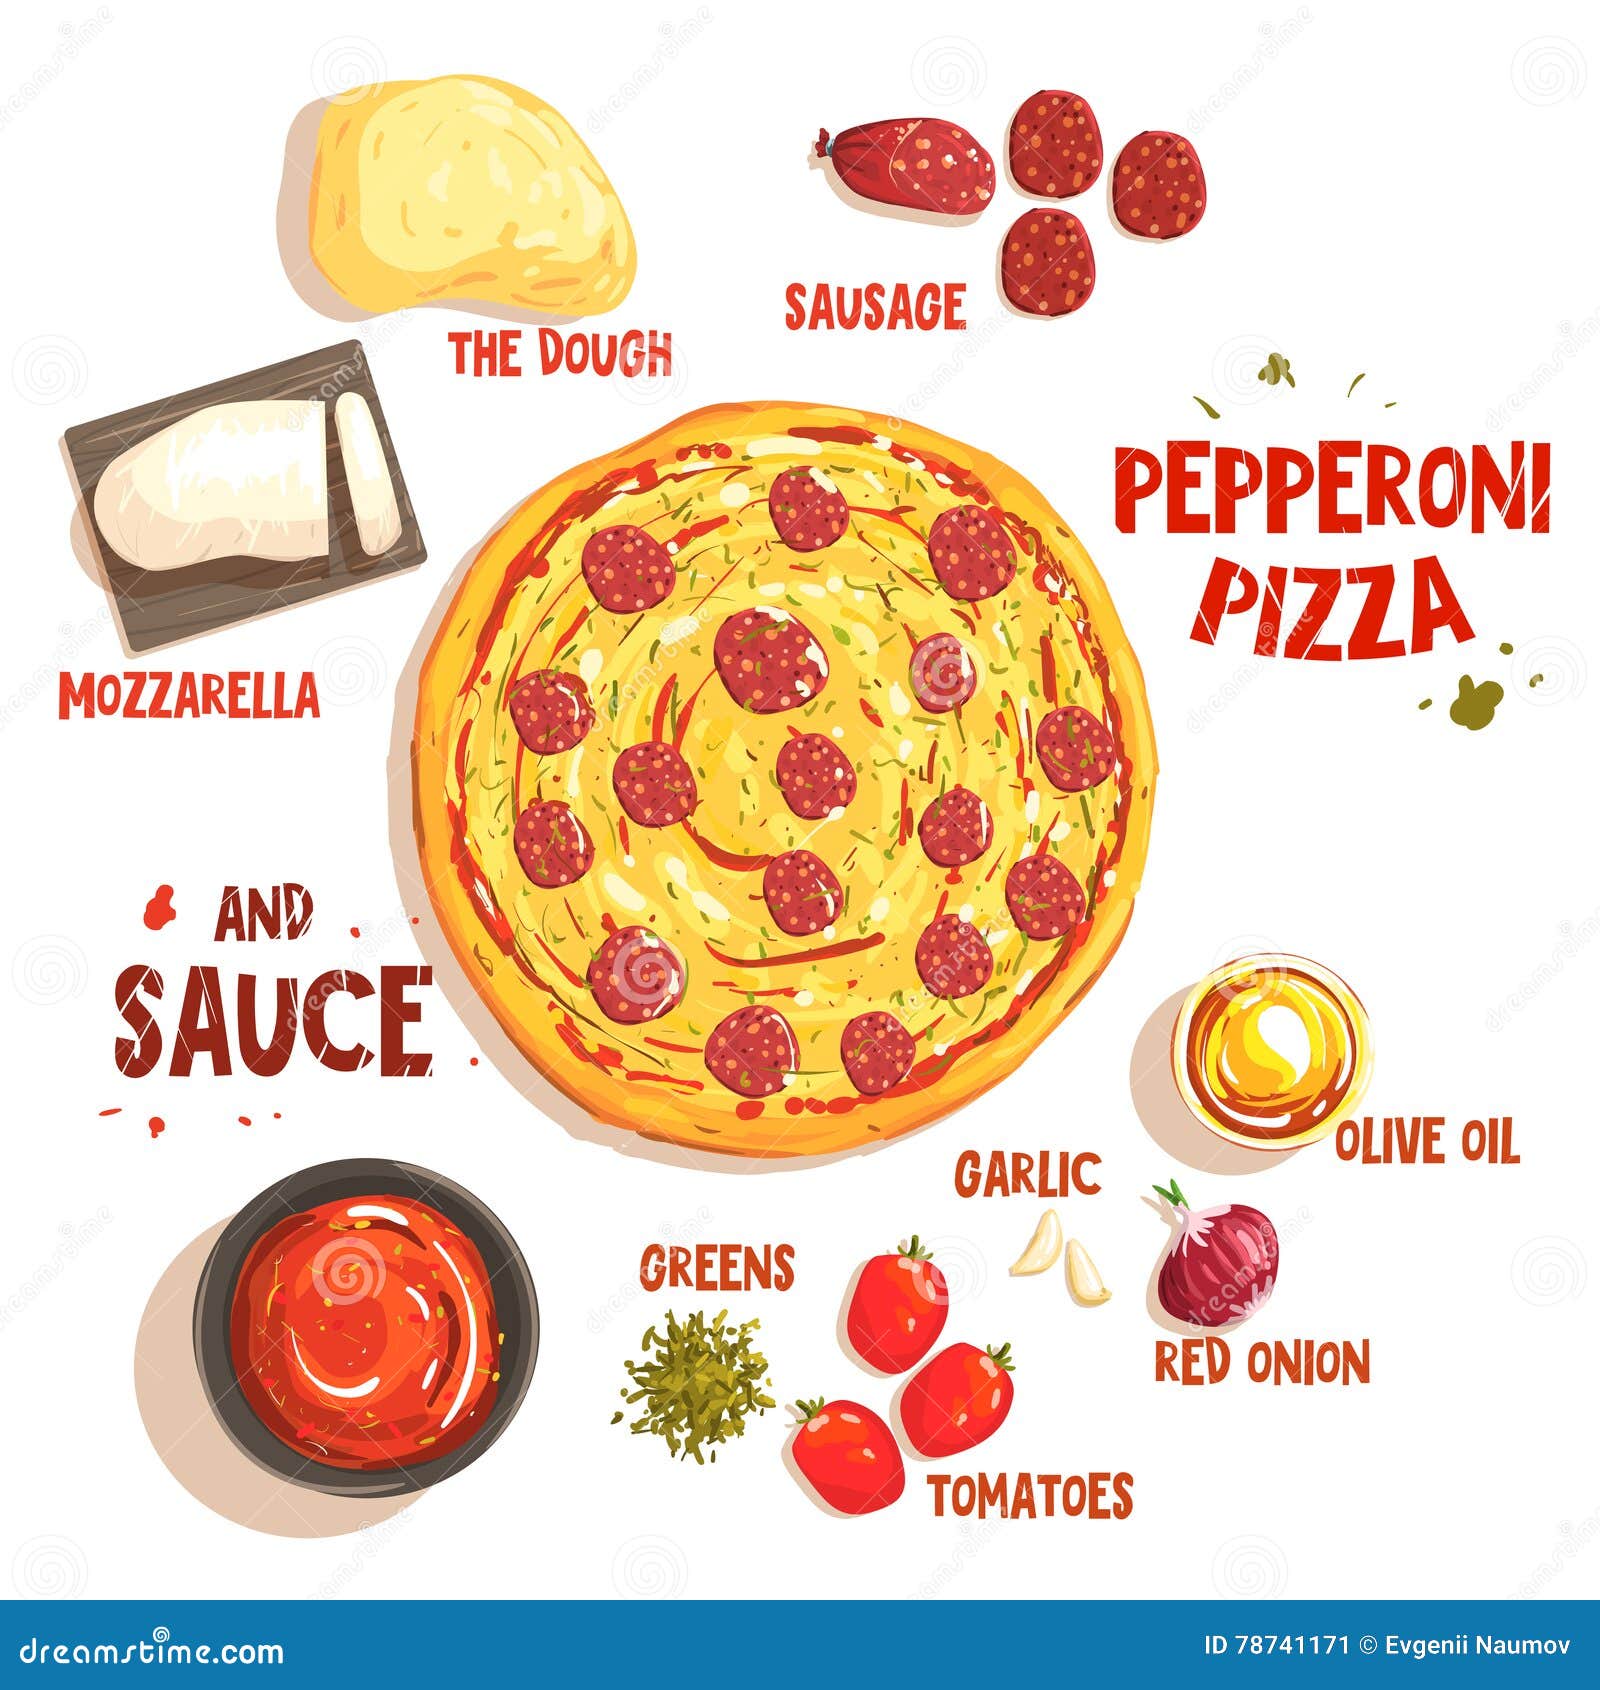 технологические карты пицца пепперони фото 62